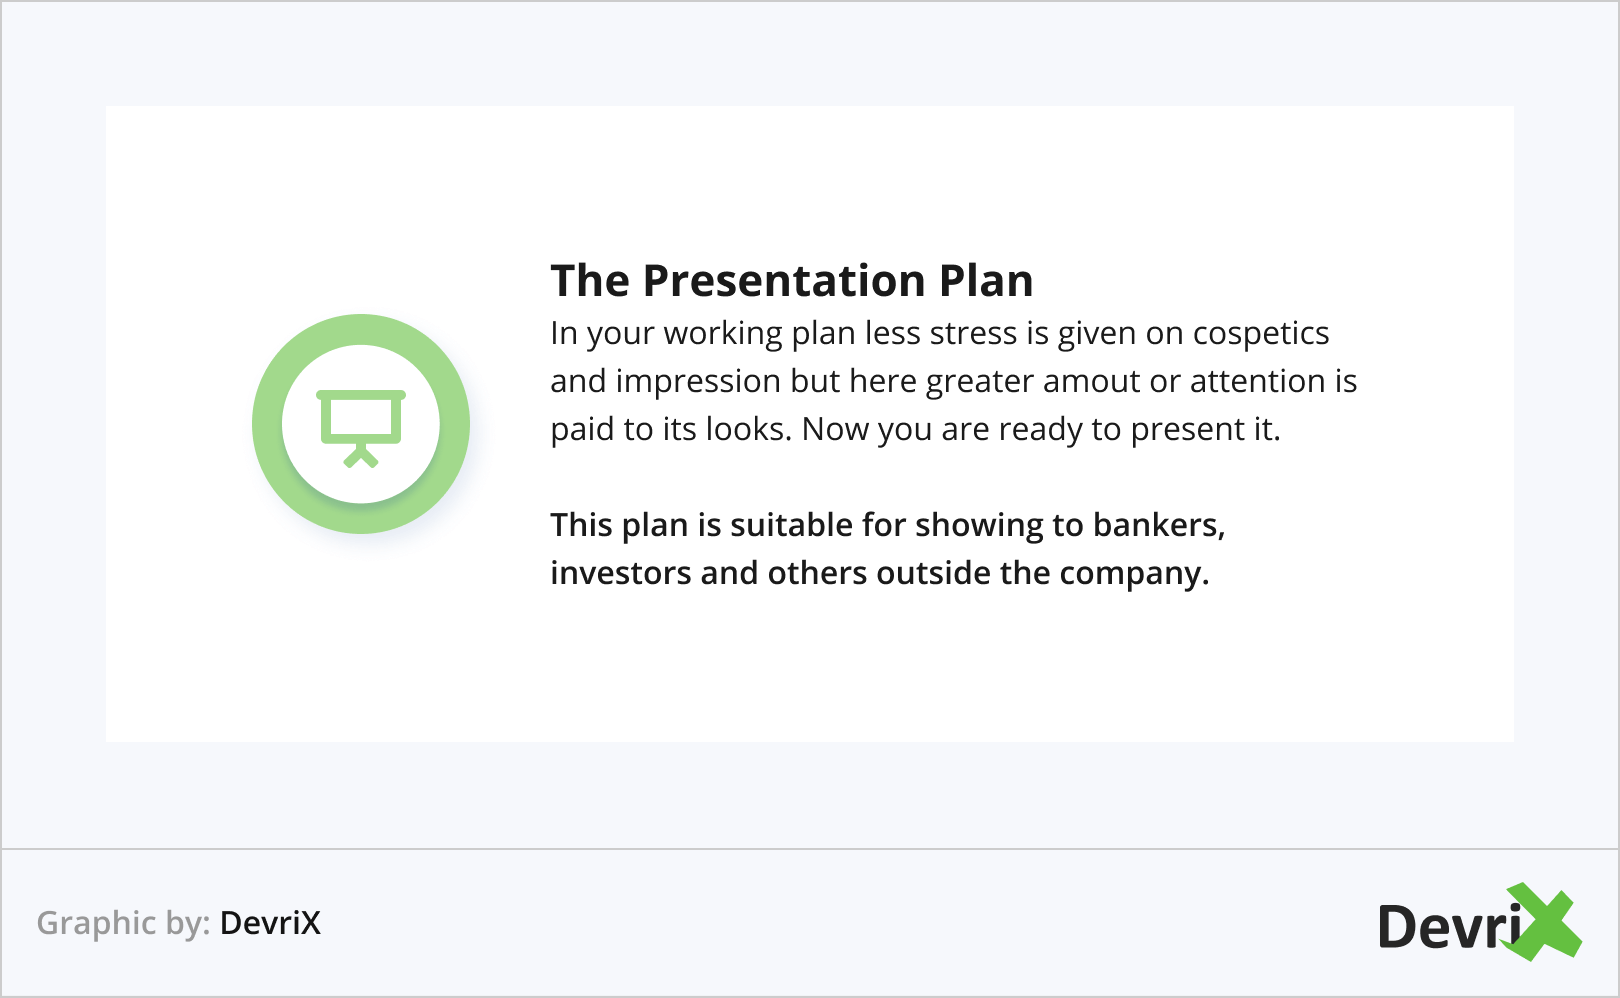 The Presentation Plan